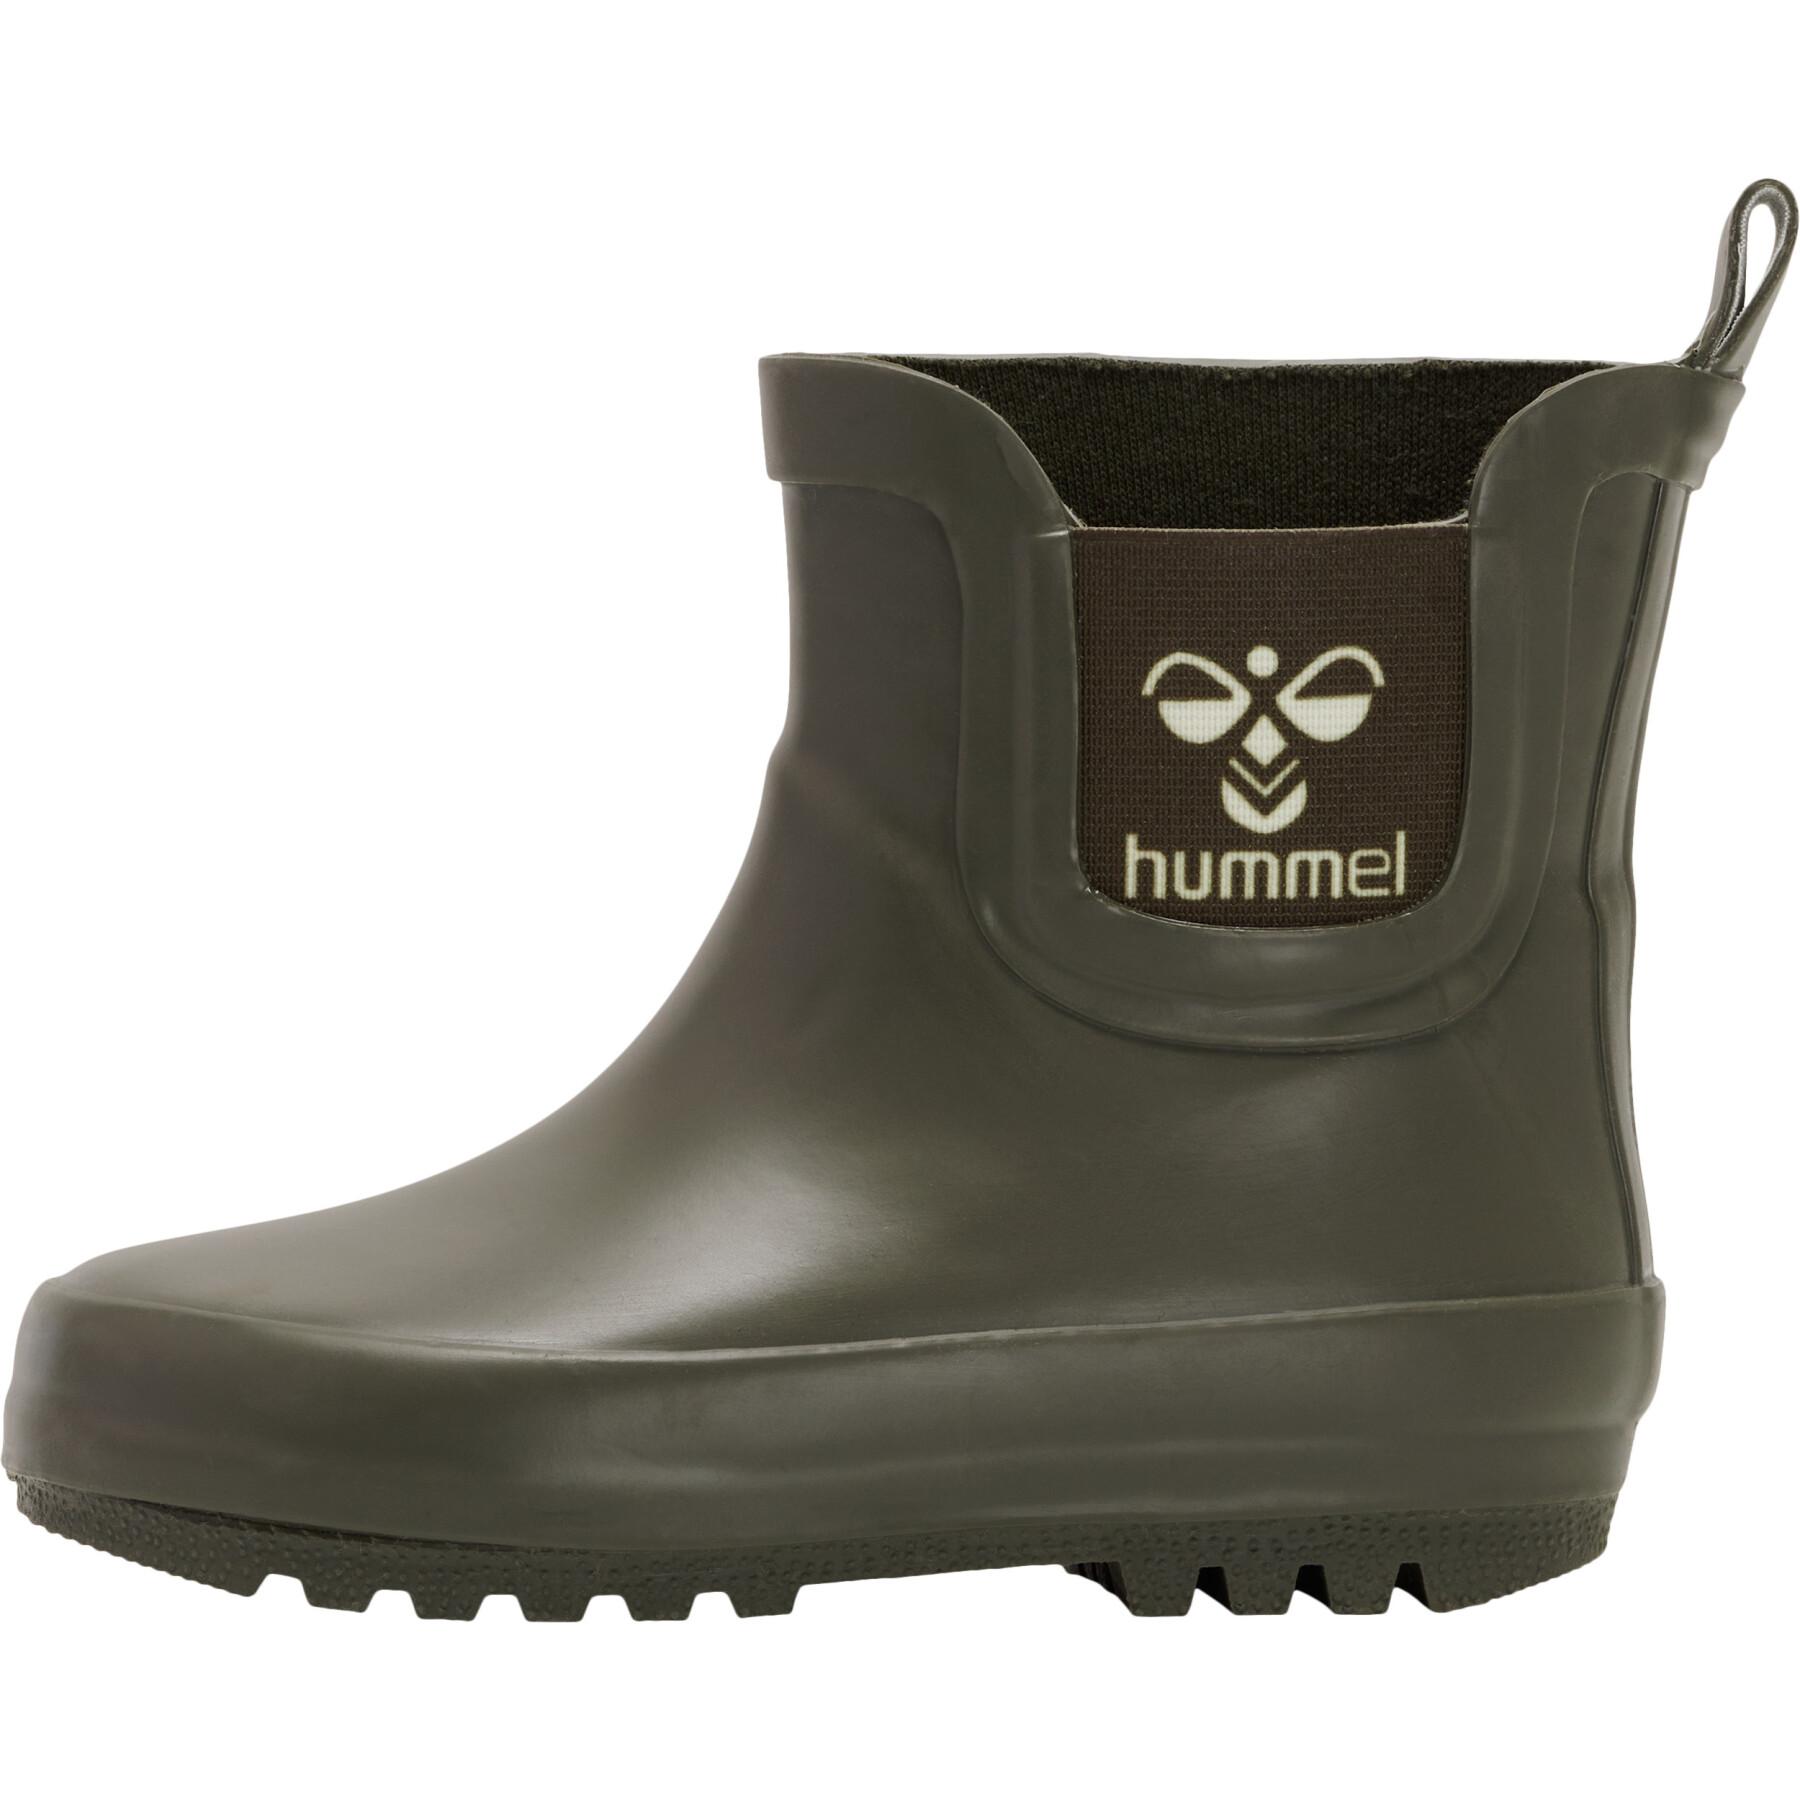 Baby rain boots Hummel Rain boots Baby Shoes - Baby